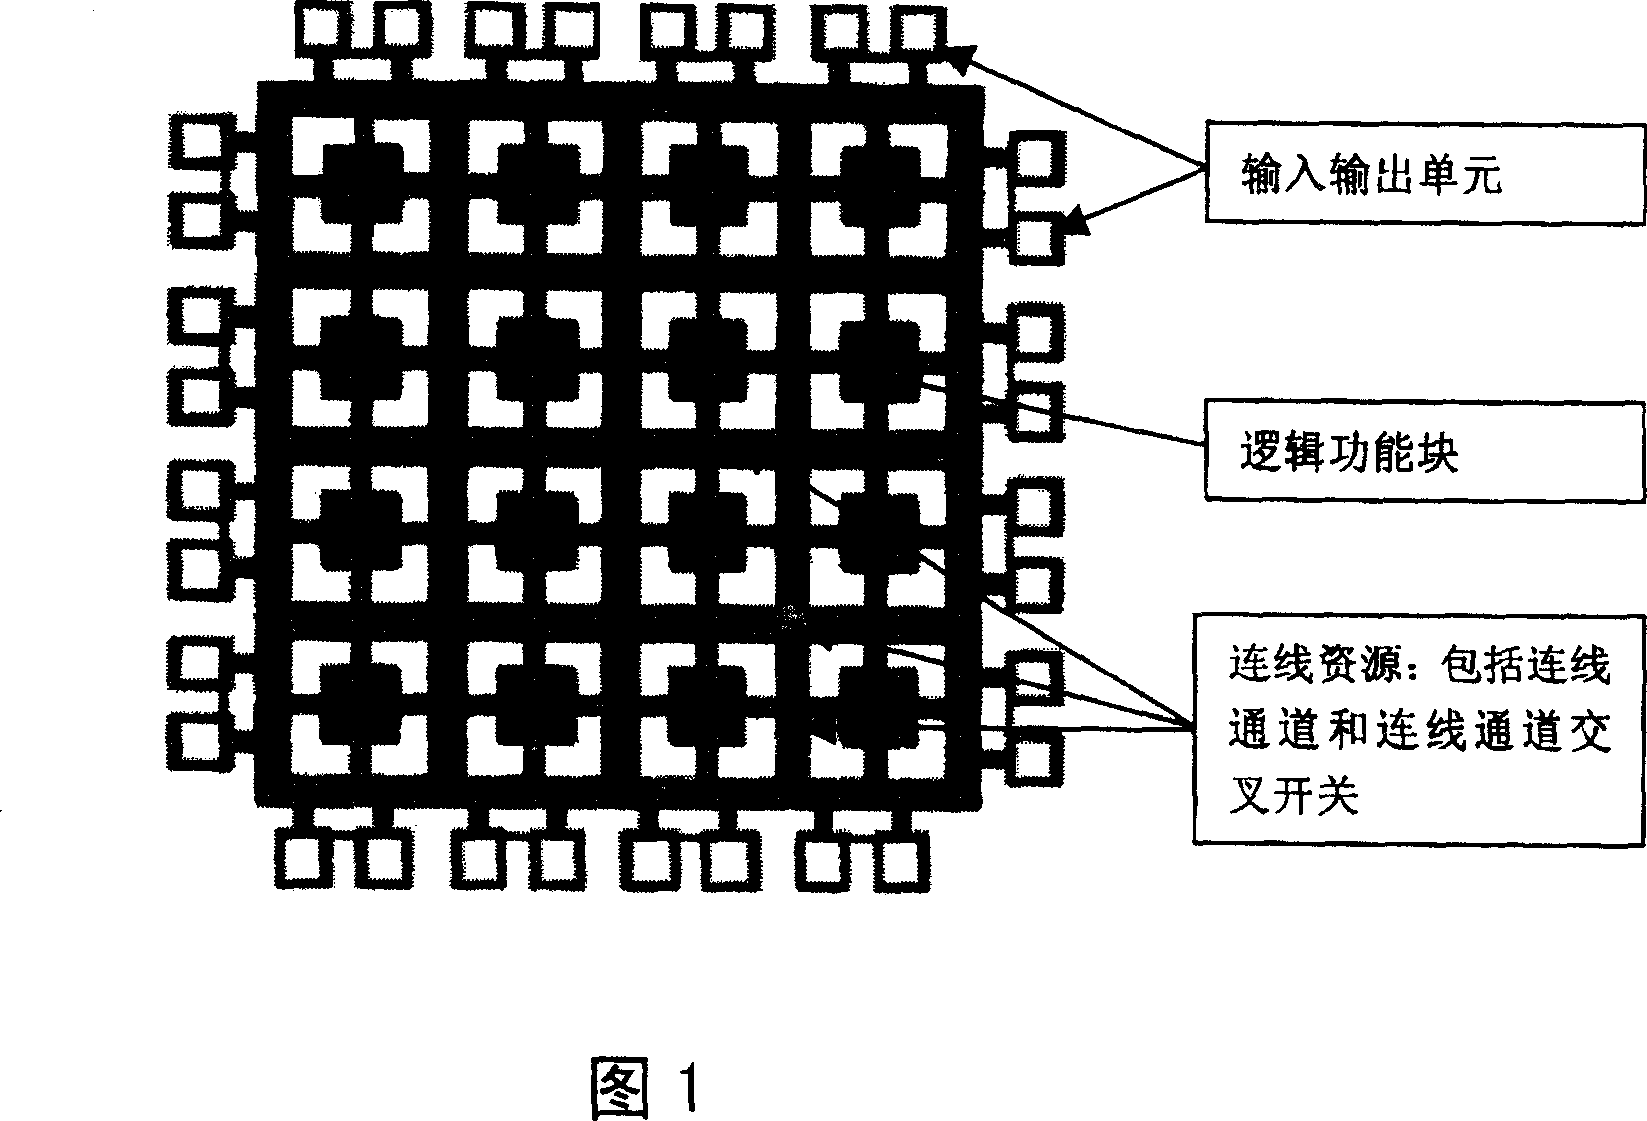 Symmetric connect passage of programmable logic device